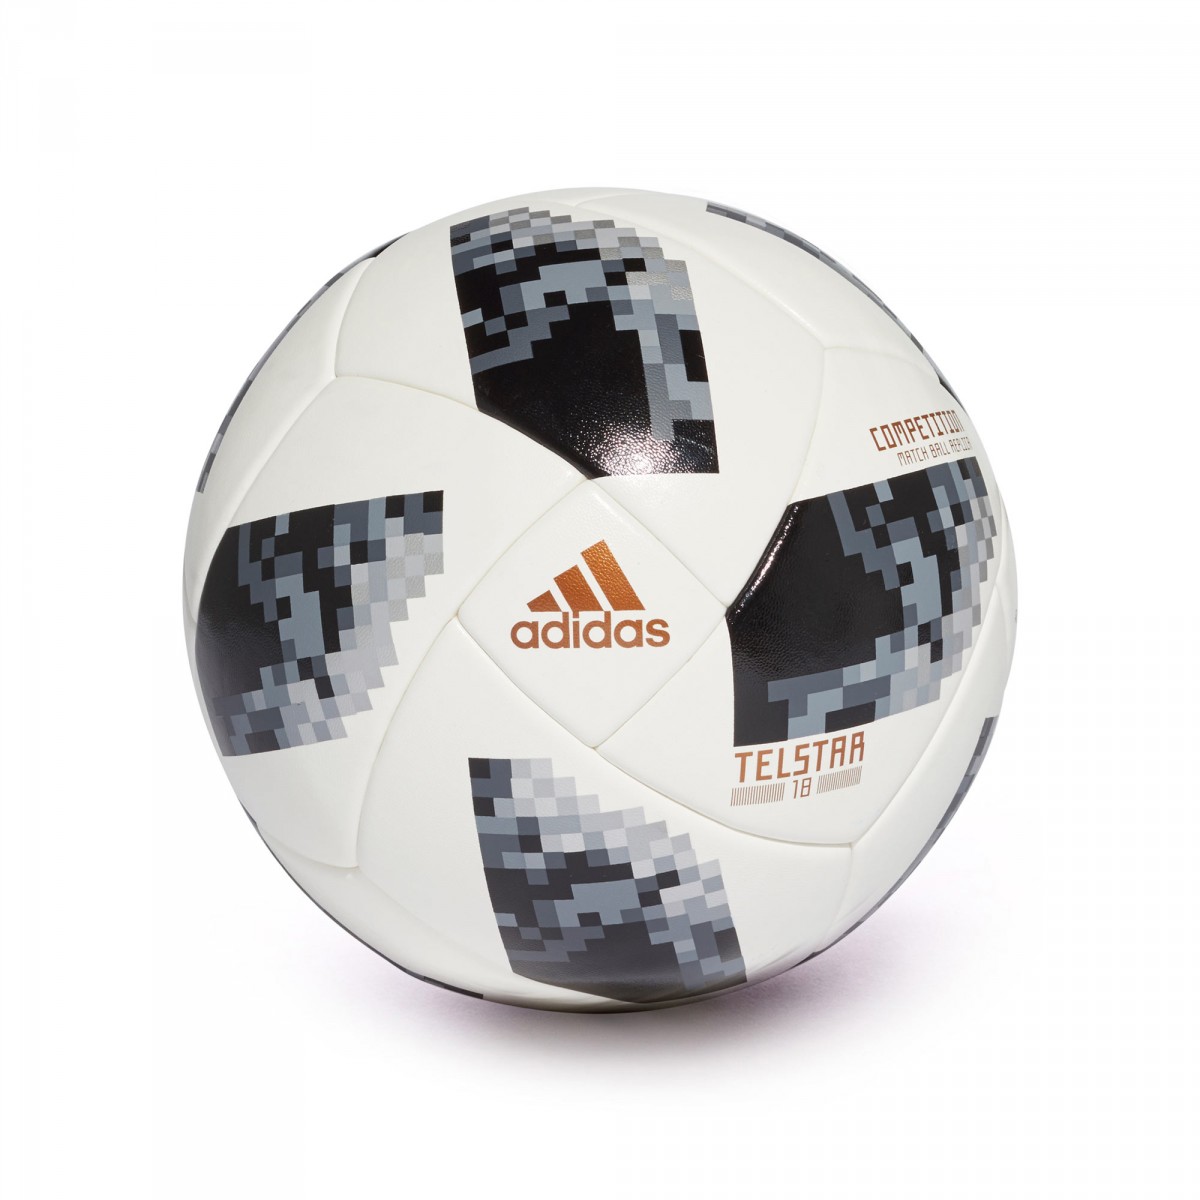 adidas world cup ball